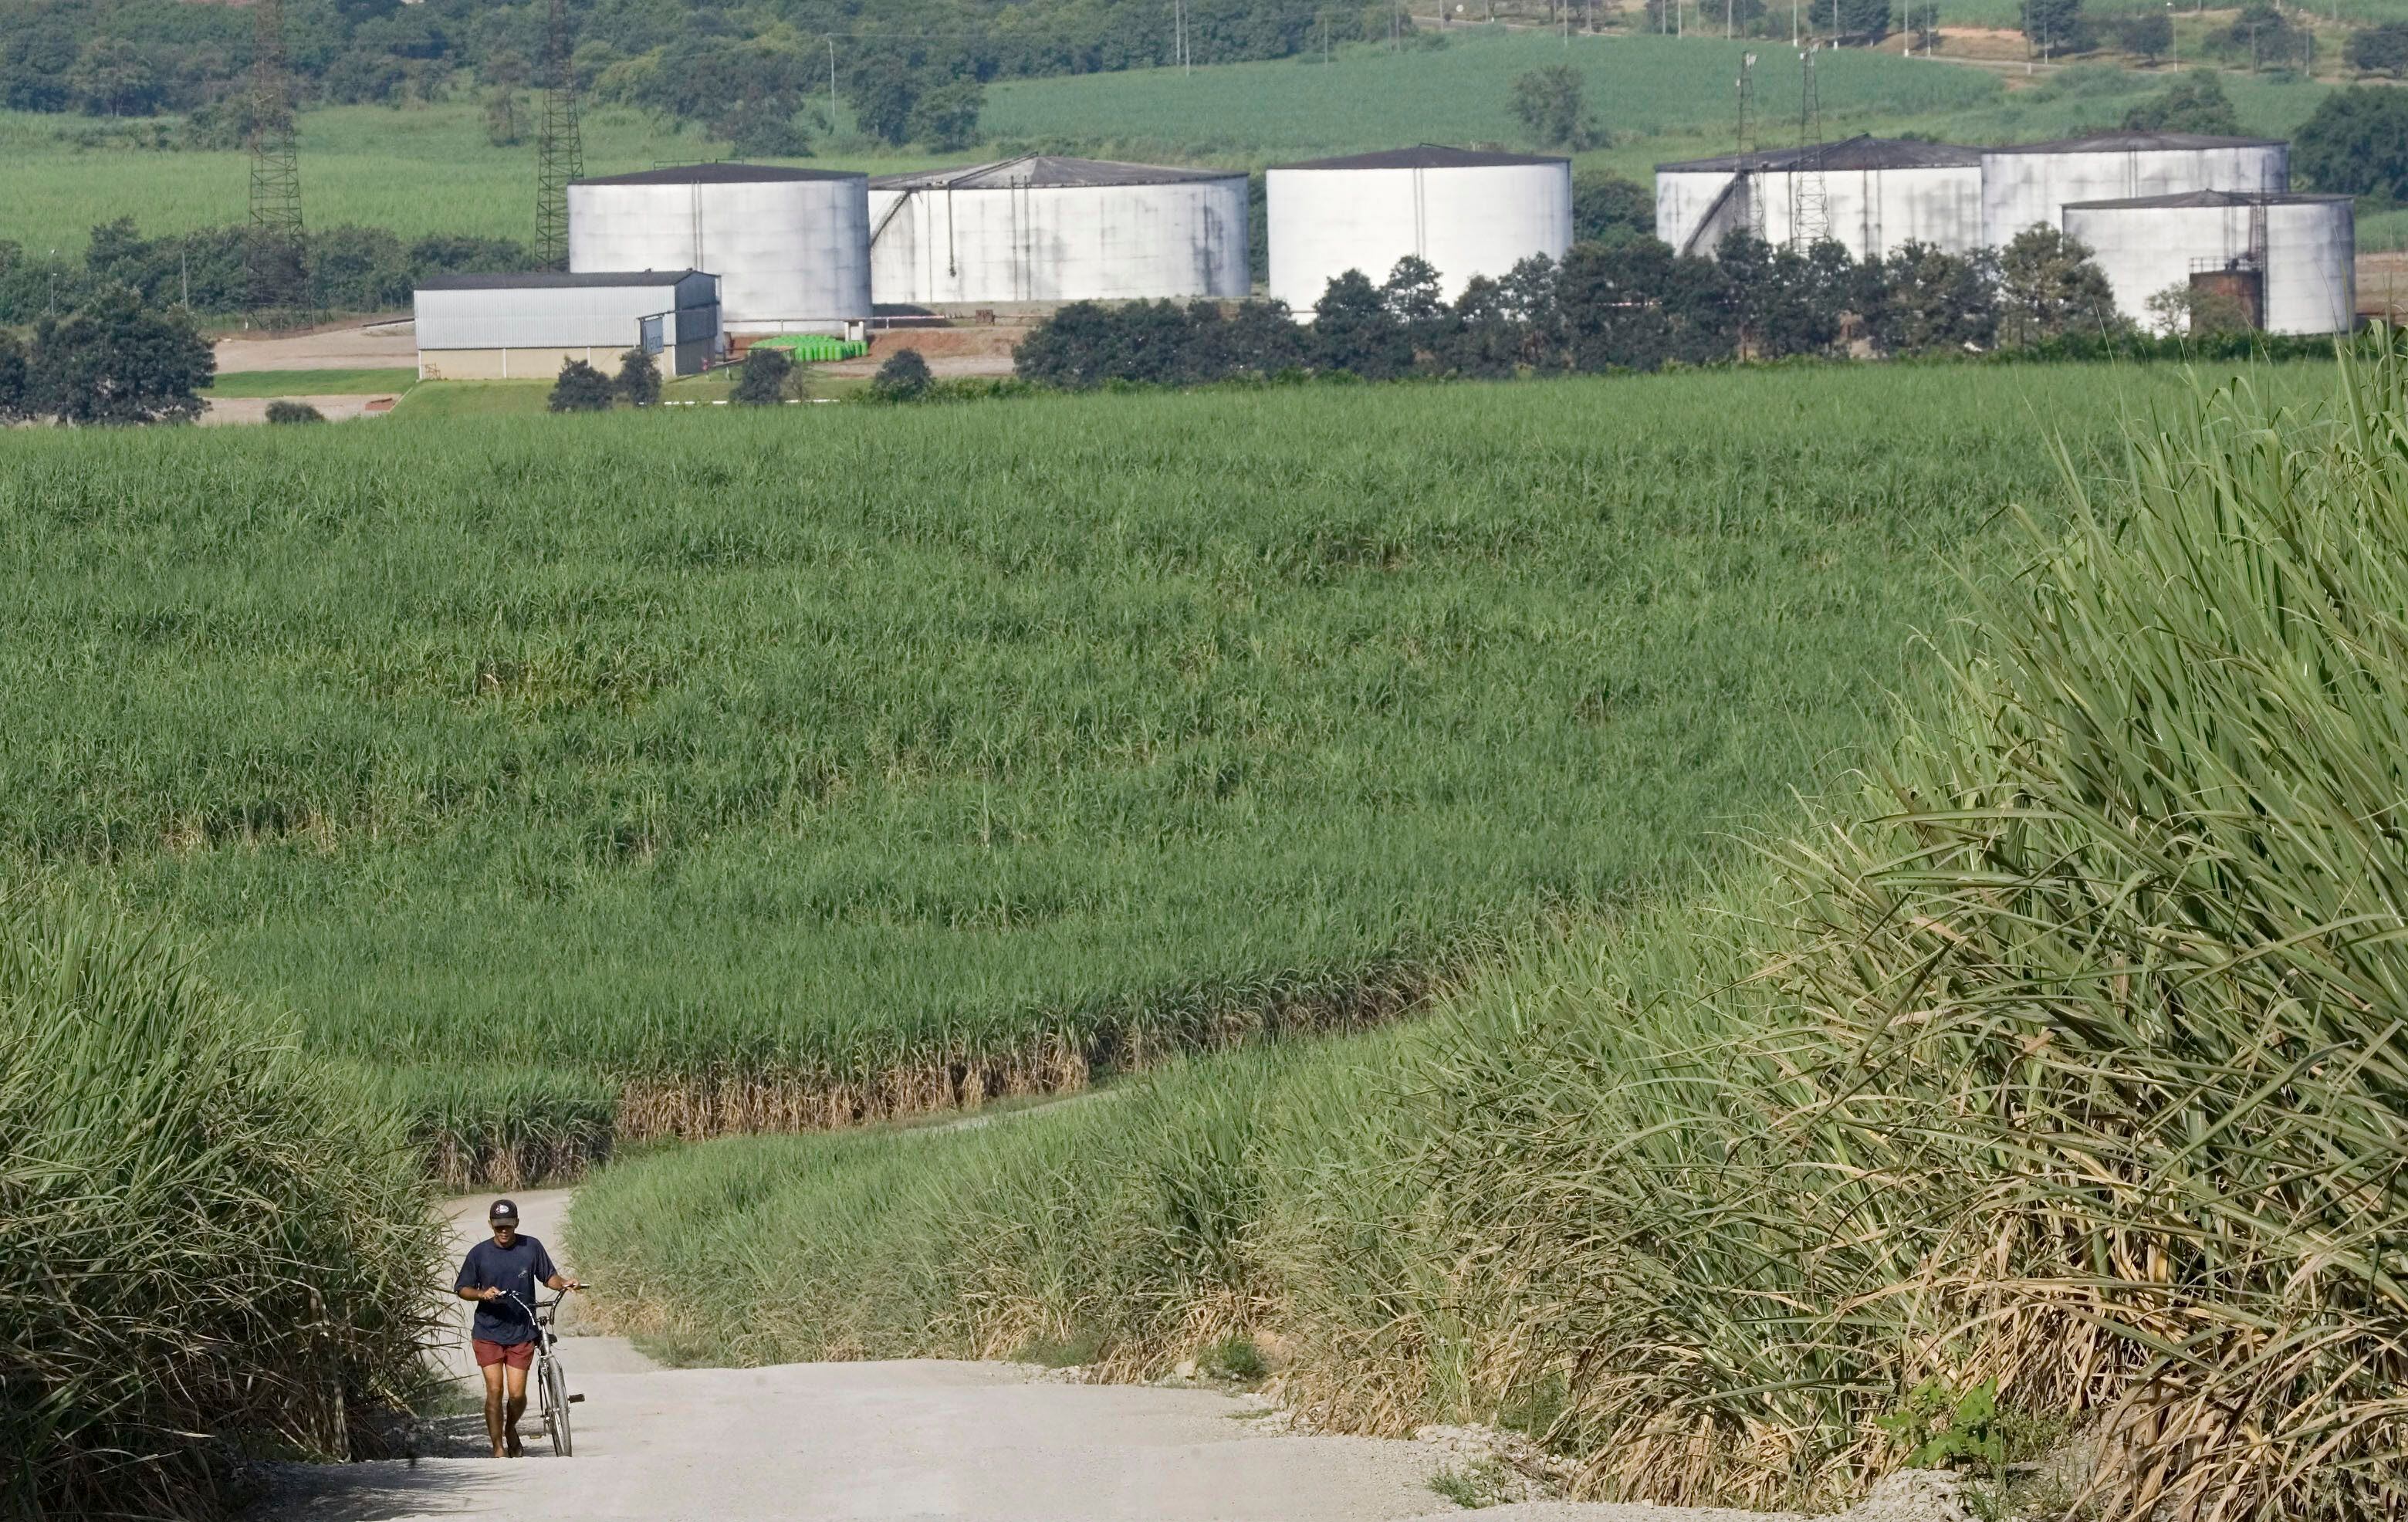 Una persona camina entre campos de caña de azúcar en Piracicaba, Brasil. Al fondo, tanques llenos de etanol.